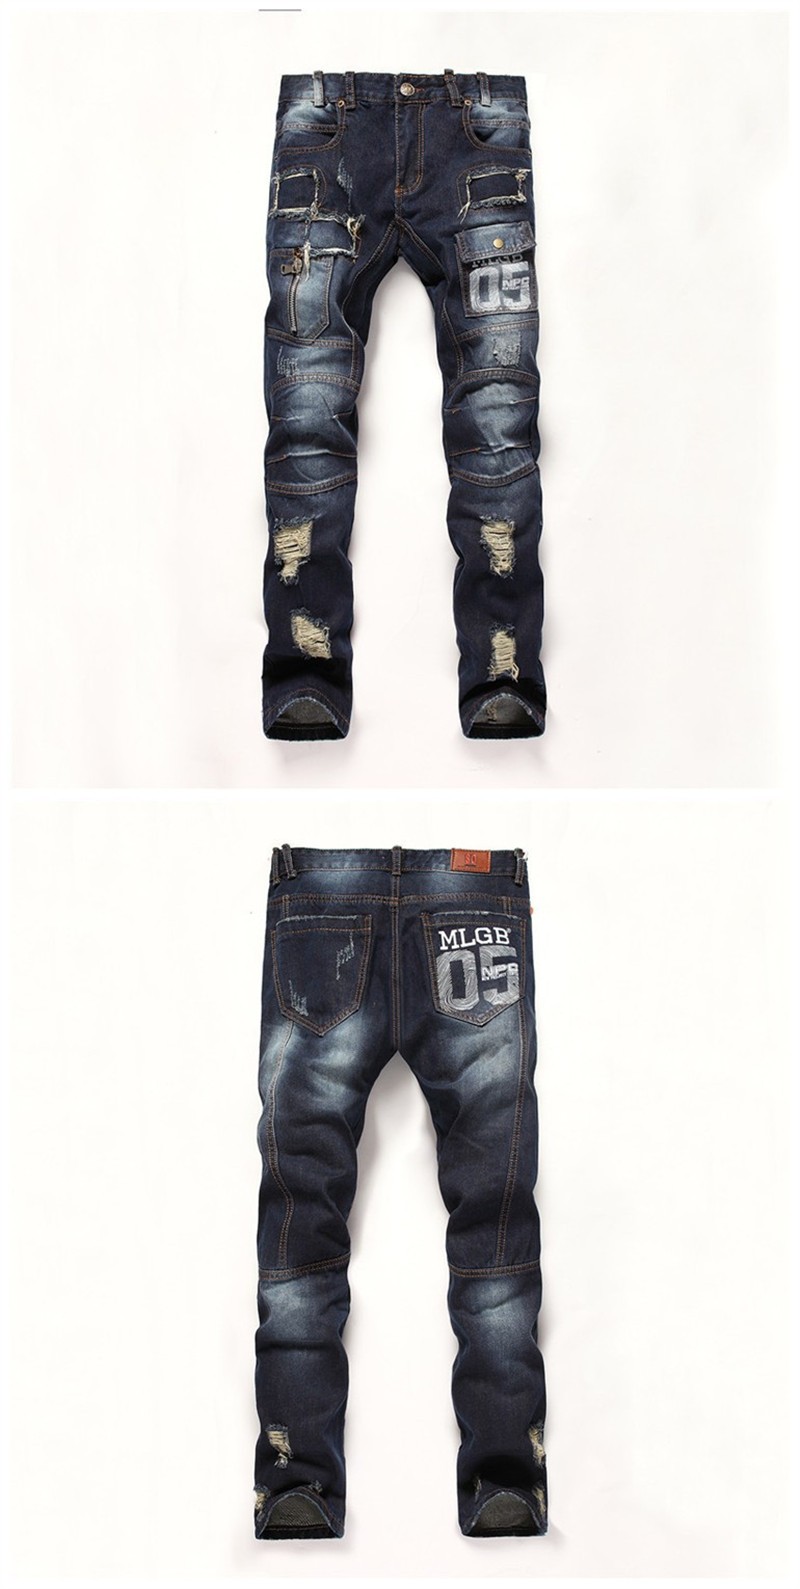 Ripped Jeans Men 2015 New Zippers Rock Club Fashion Men Jeans Pants Biker Jeans Ripped Jeans For Men 17gjsmt951